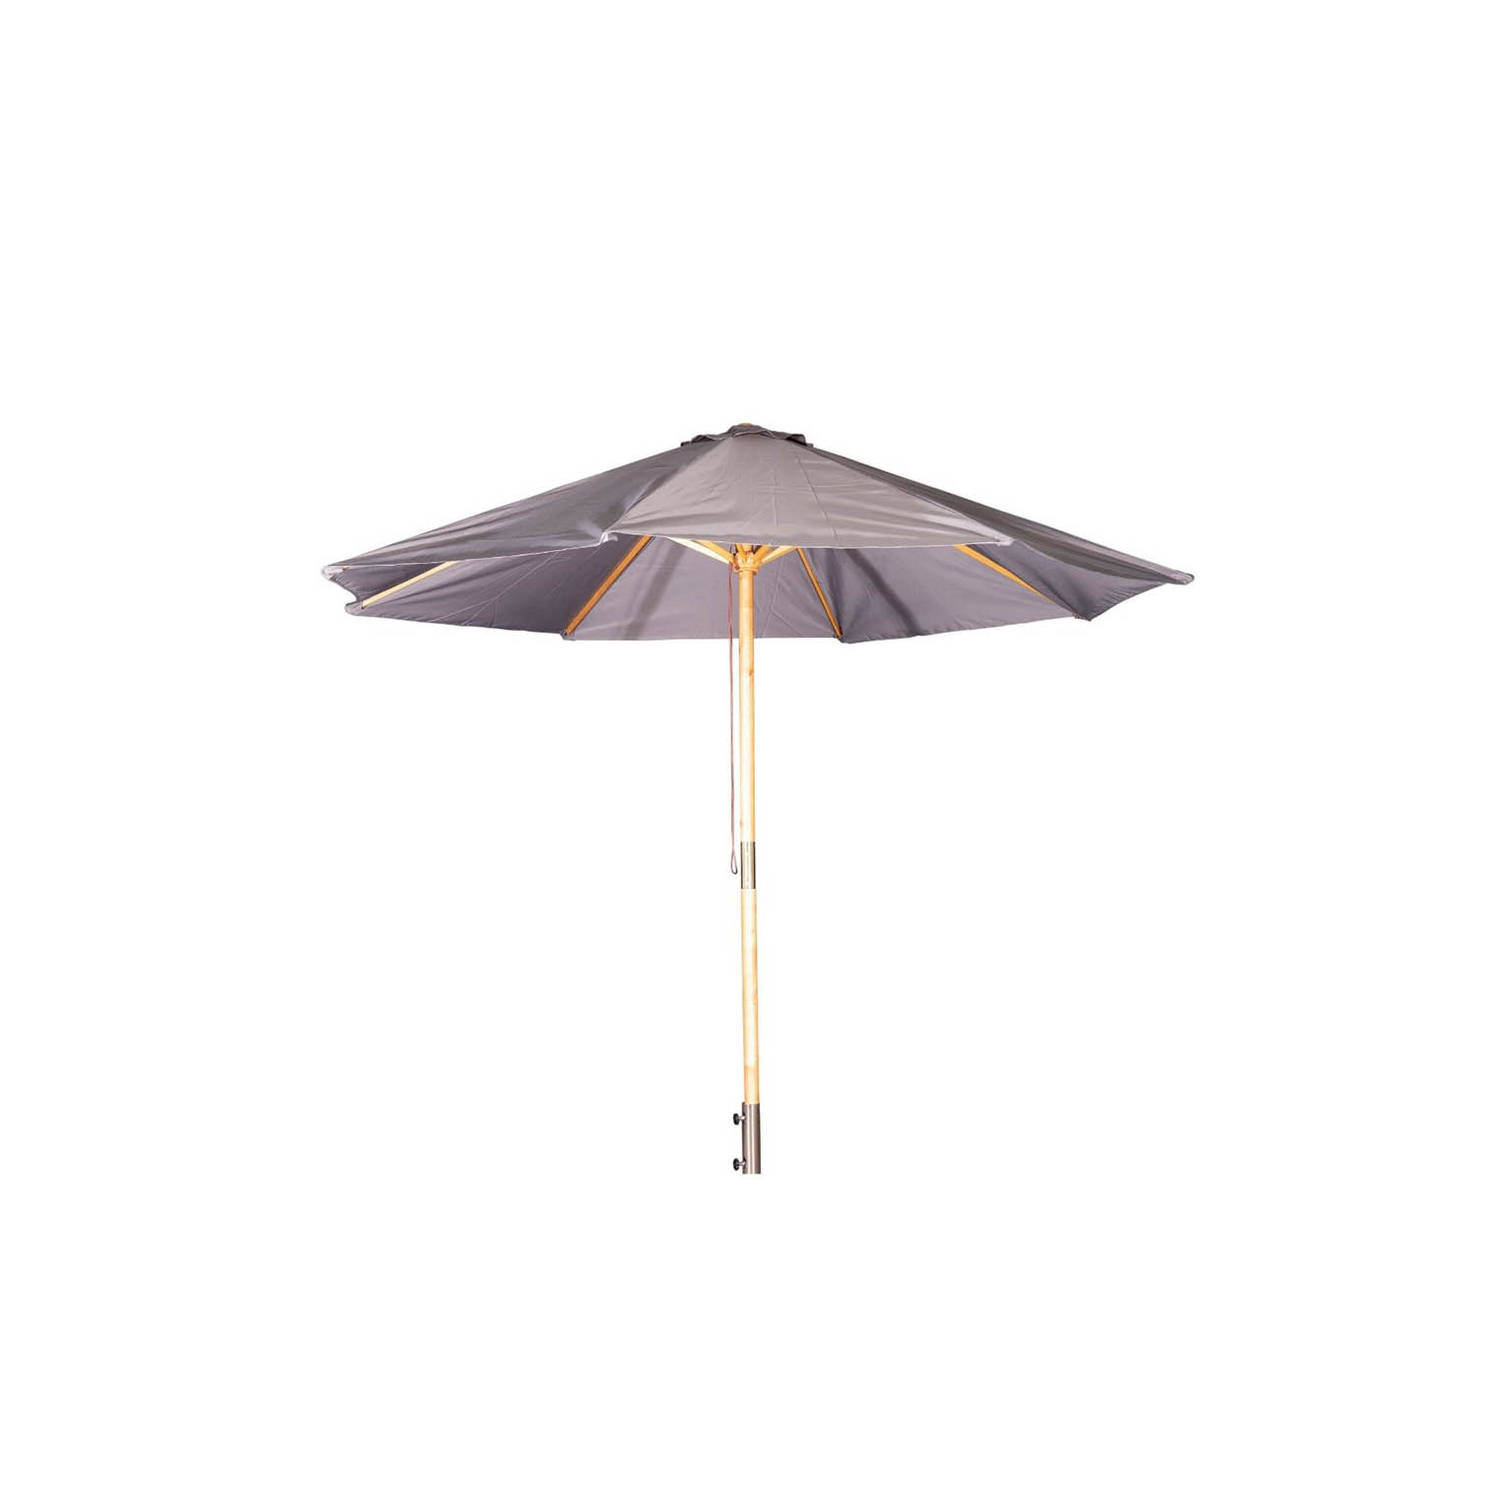 Naxos parasol grijs, natuur.